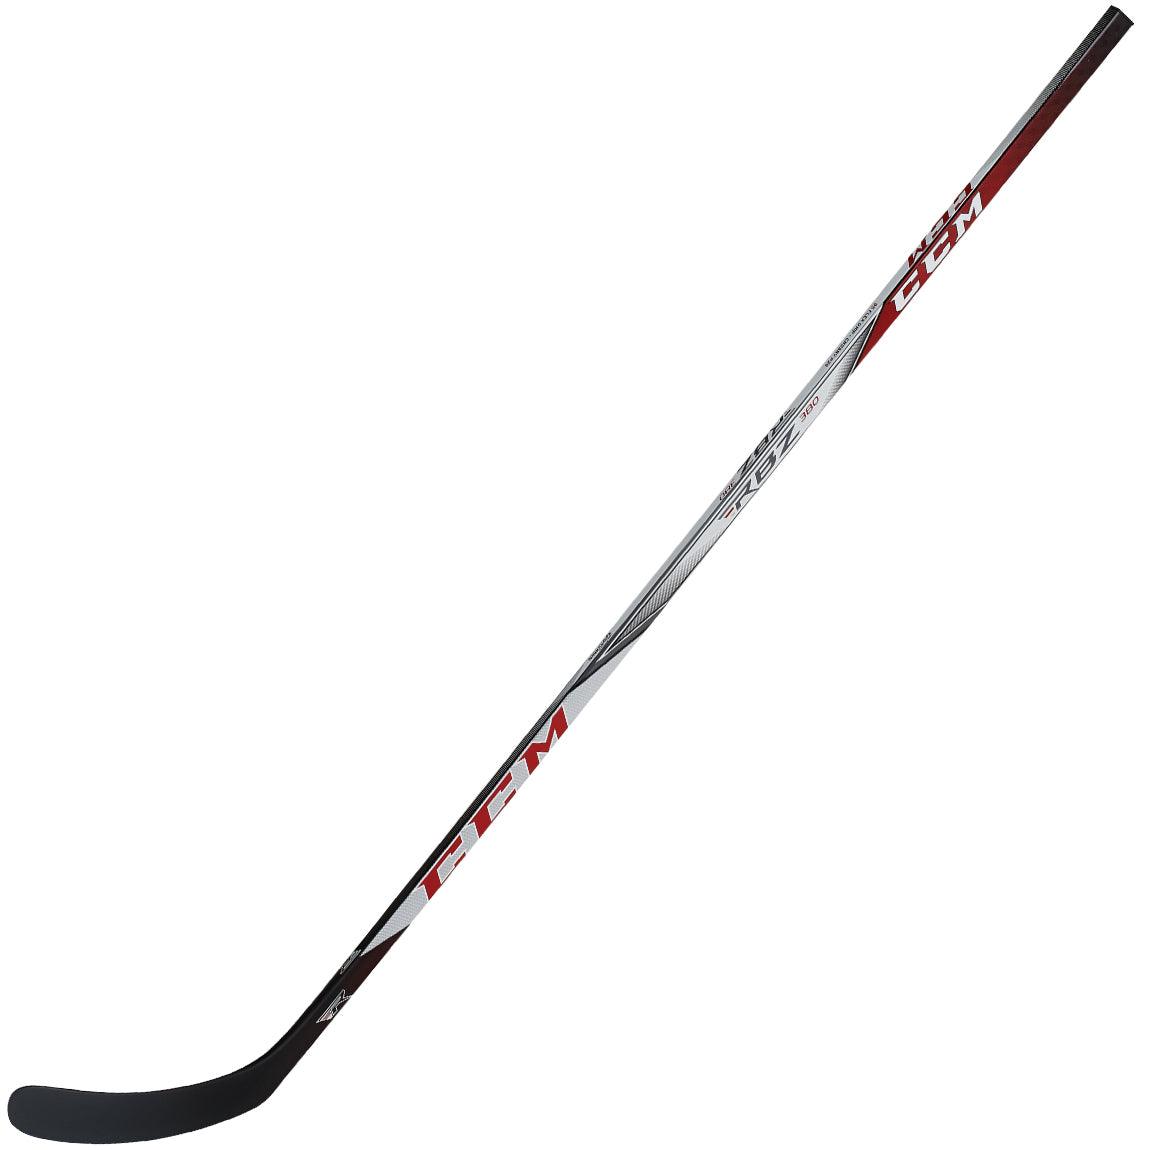 RBZ 380 Hockey Stick - Junior - Sports Excellence